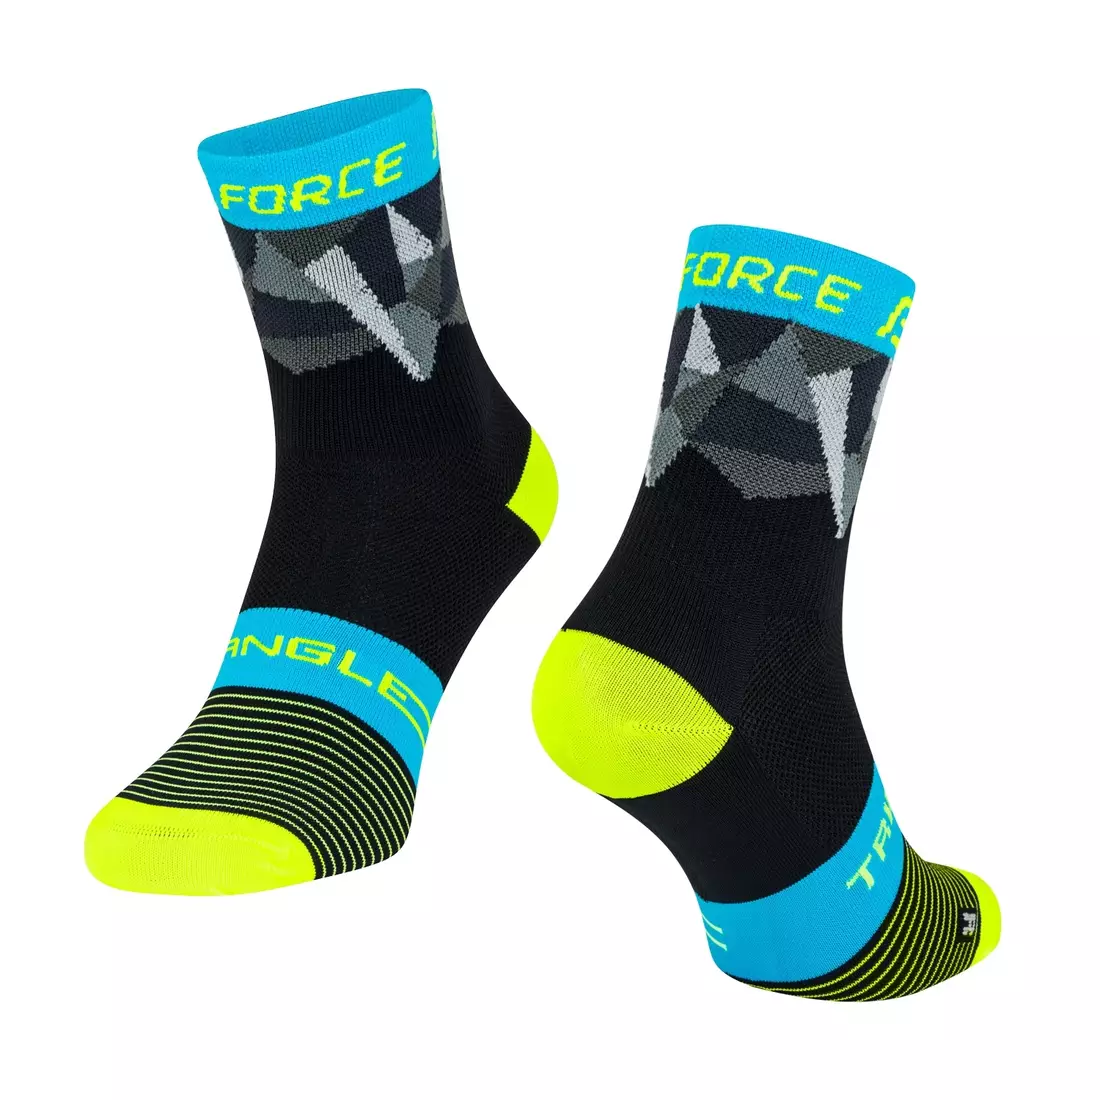 FORCE TRIANGLE cyklistické/športové ponožky, čierno-žlto-modré